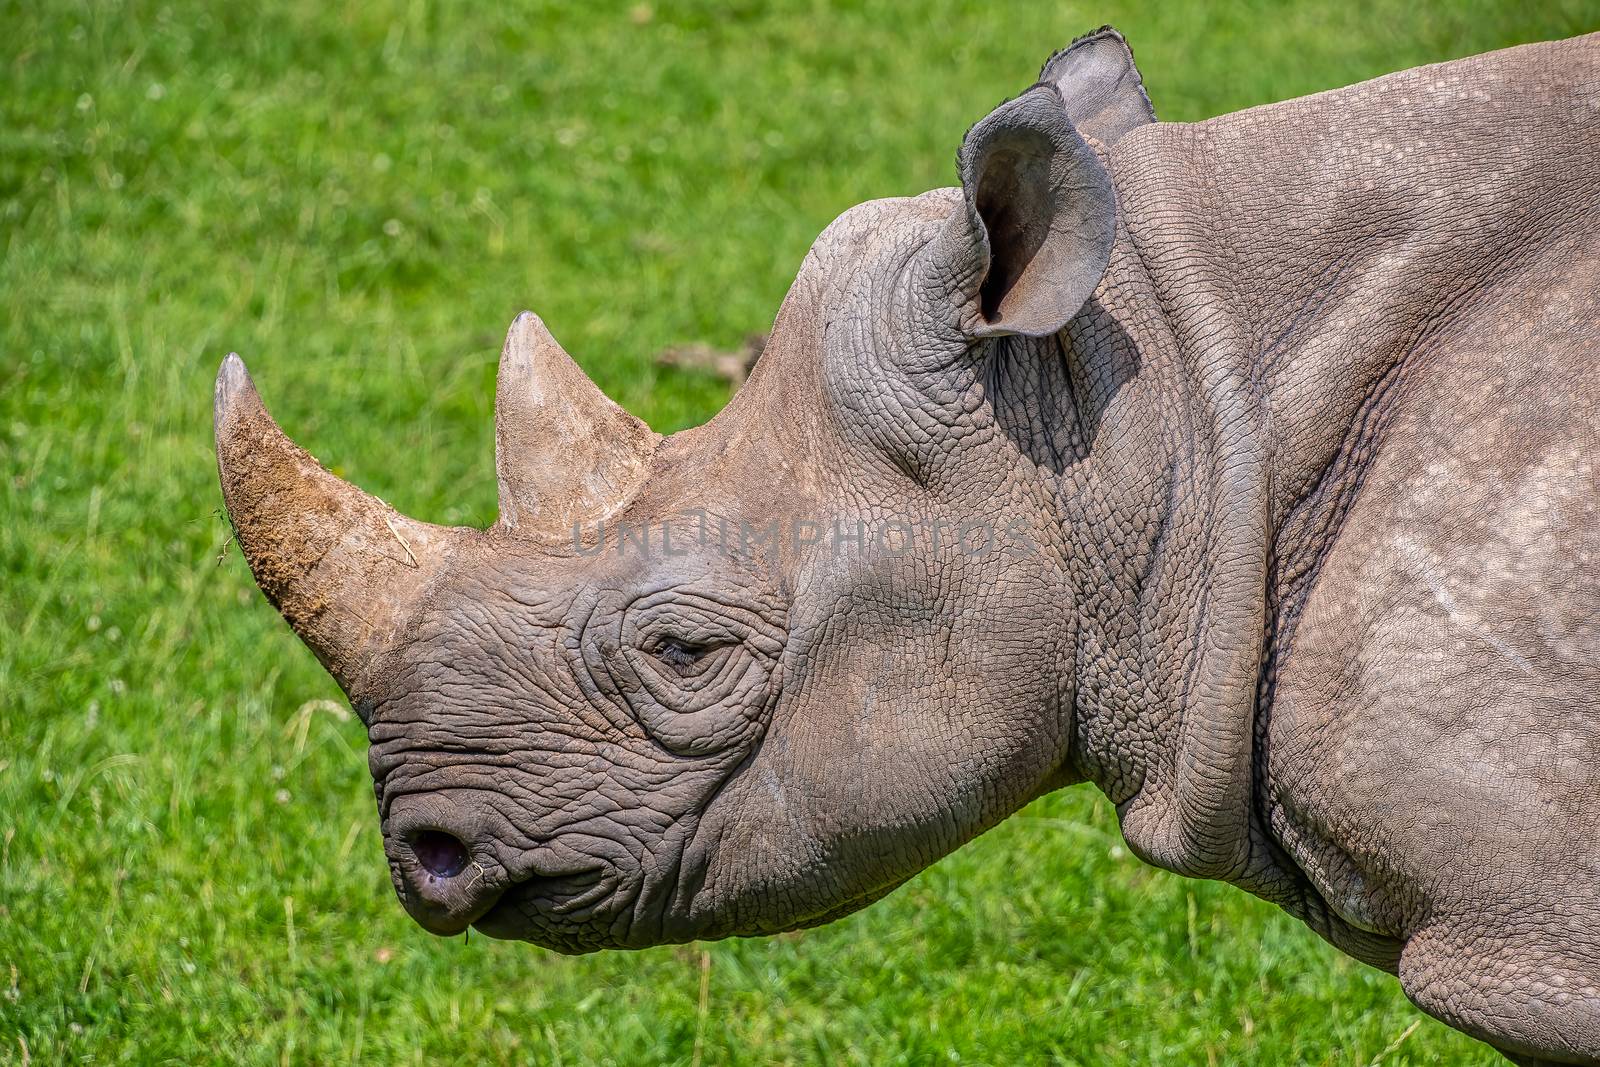 Black Rhino by Russell102